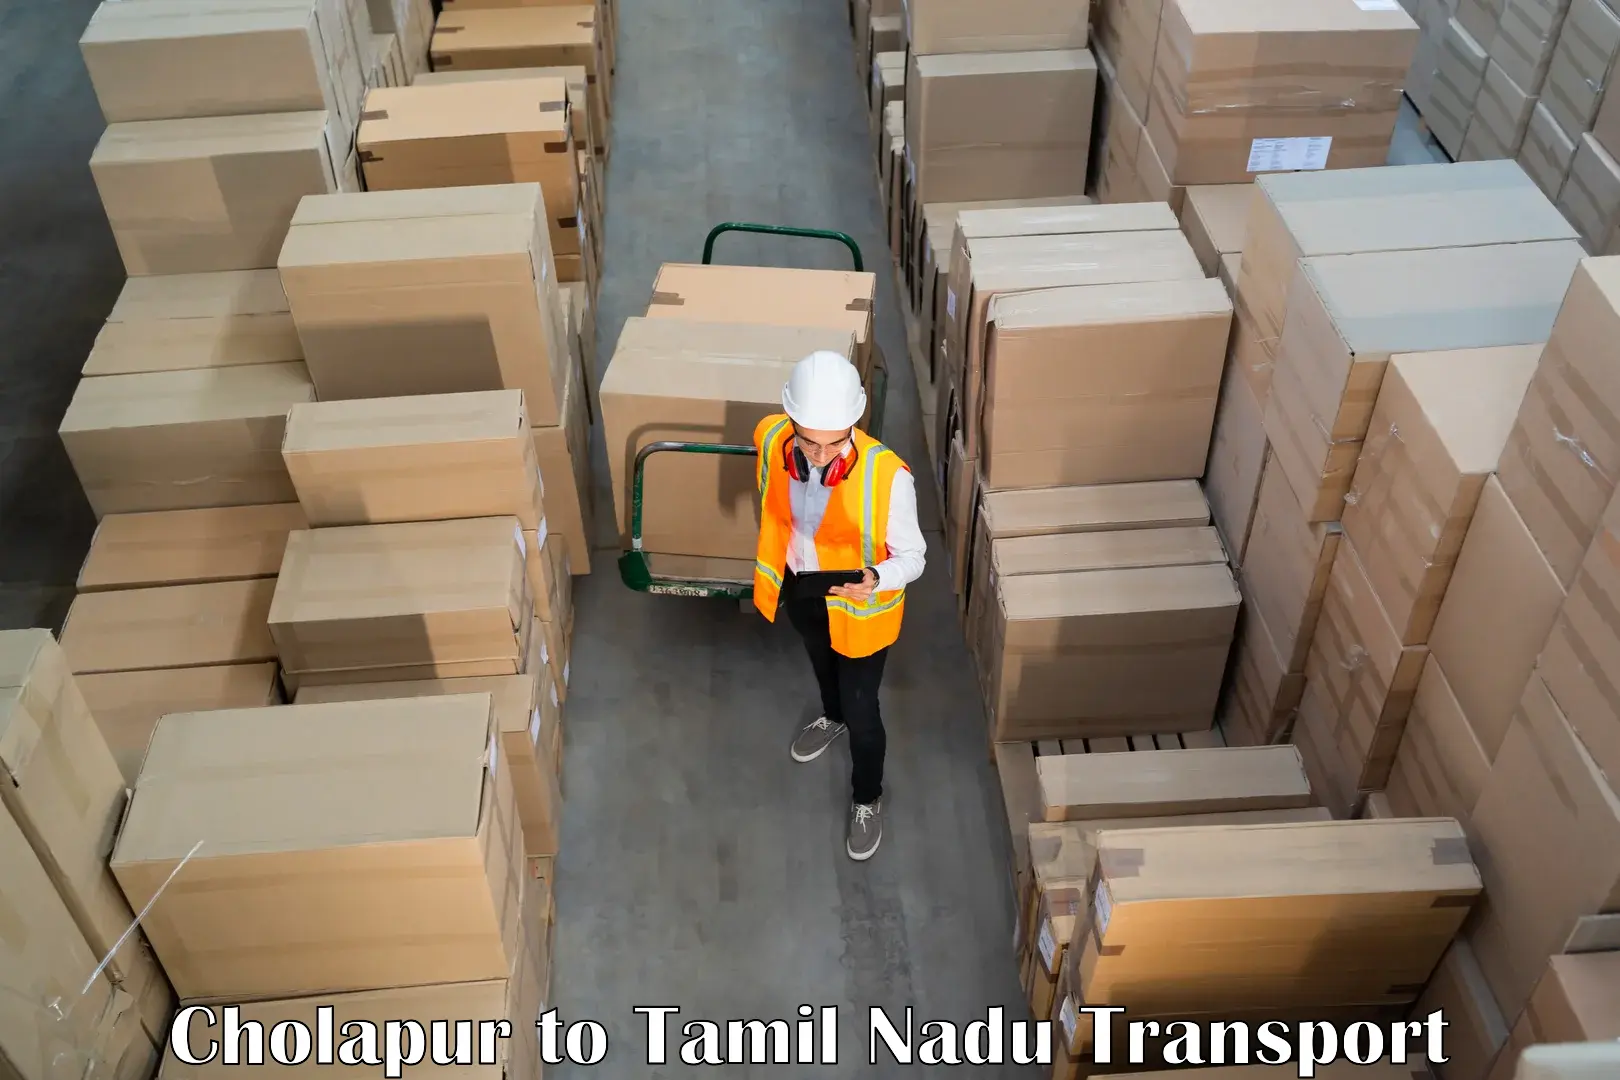 Commercial transport service Cholapur to Thiruthuraipoondi